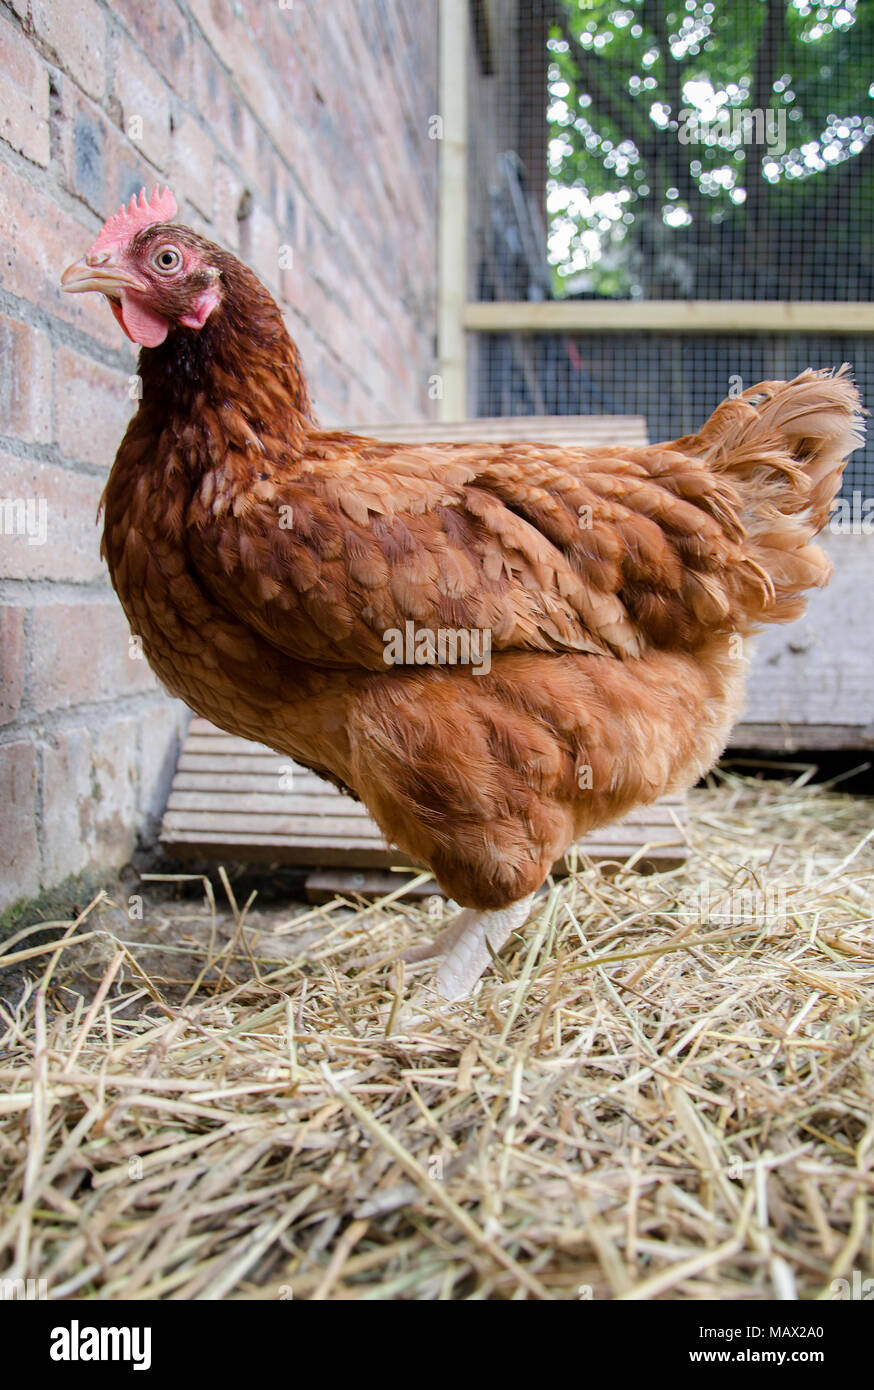 GLASGOW, SCOTLAND - AUGUST 16 2013: An ISA Brown hen standing on hay in a chicken coop. Stock Photo